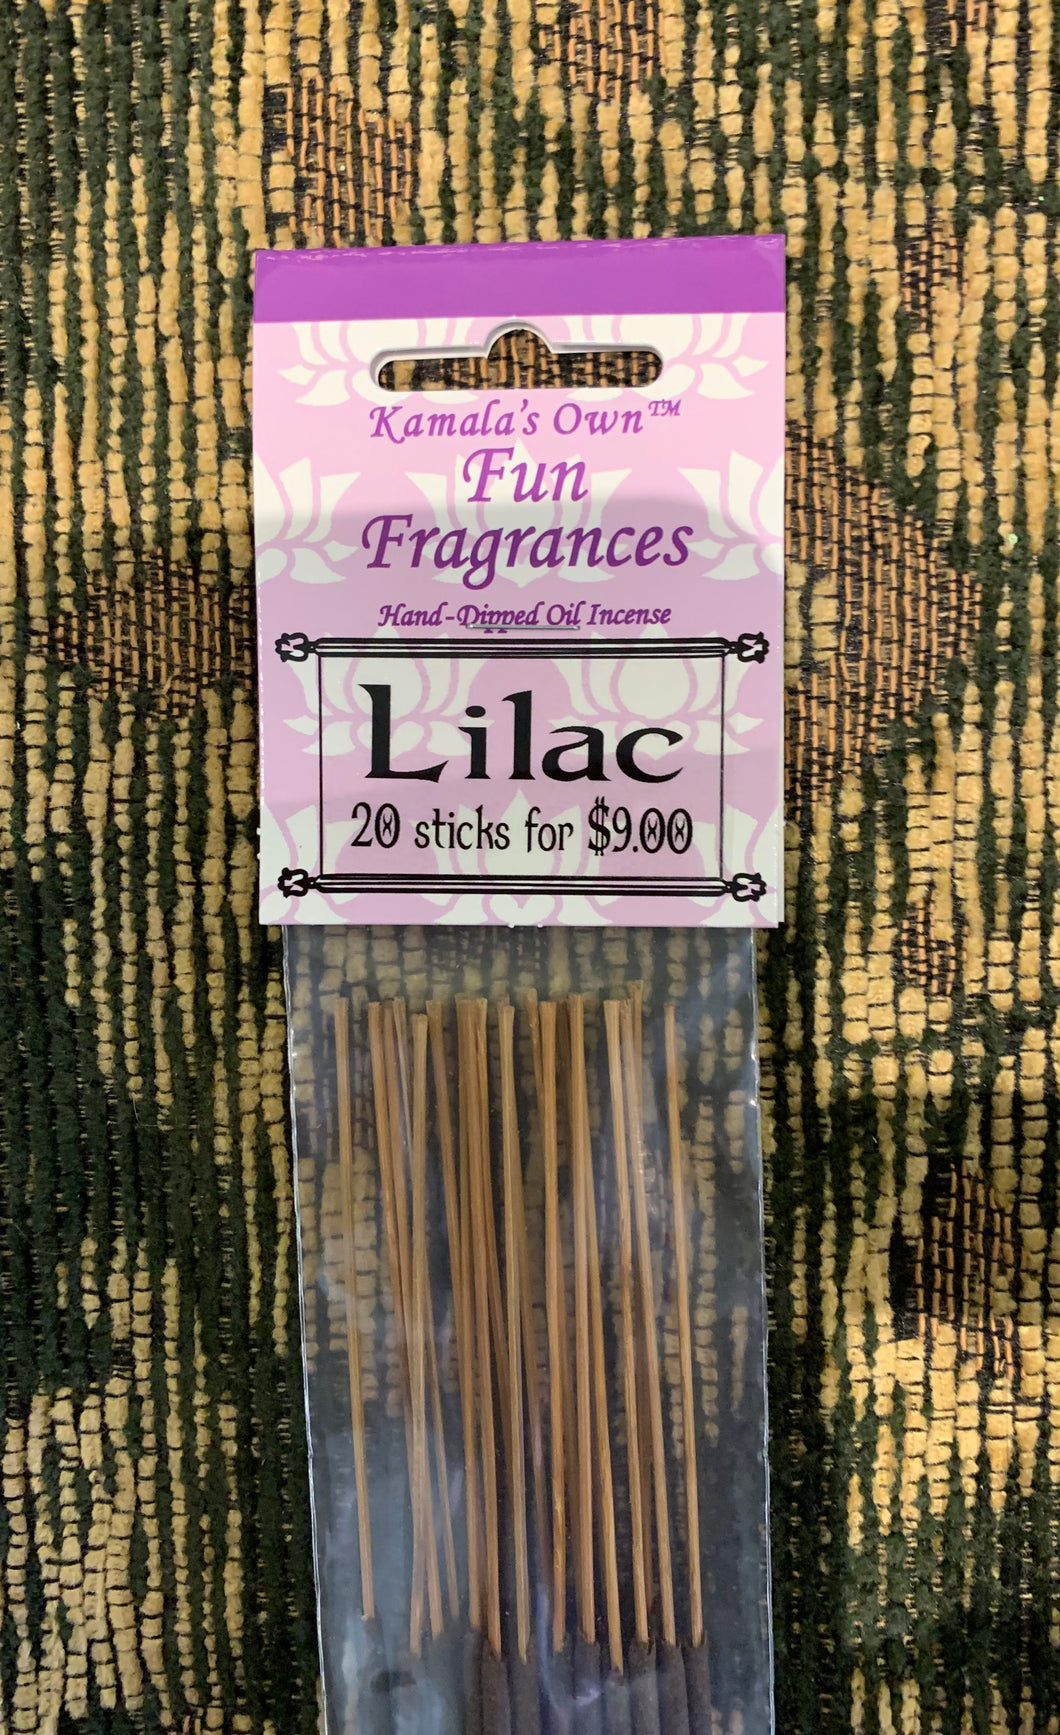 Lilac sticks